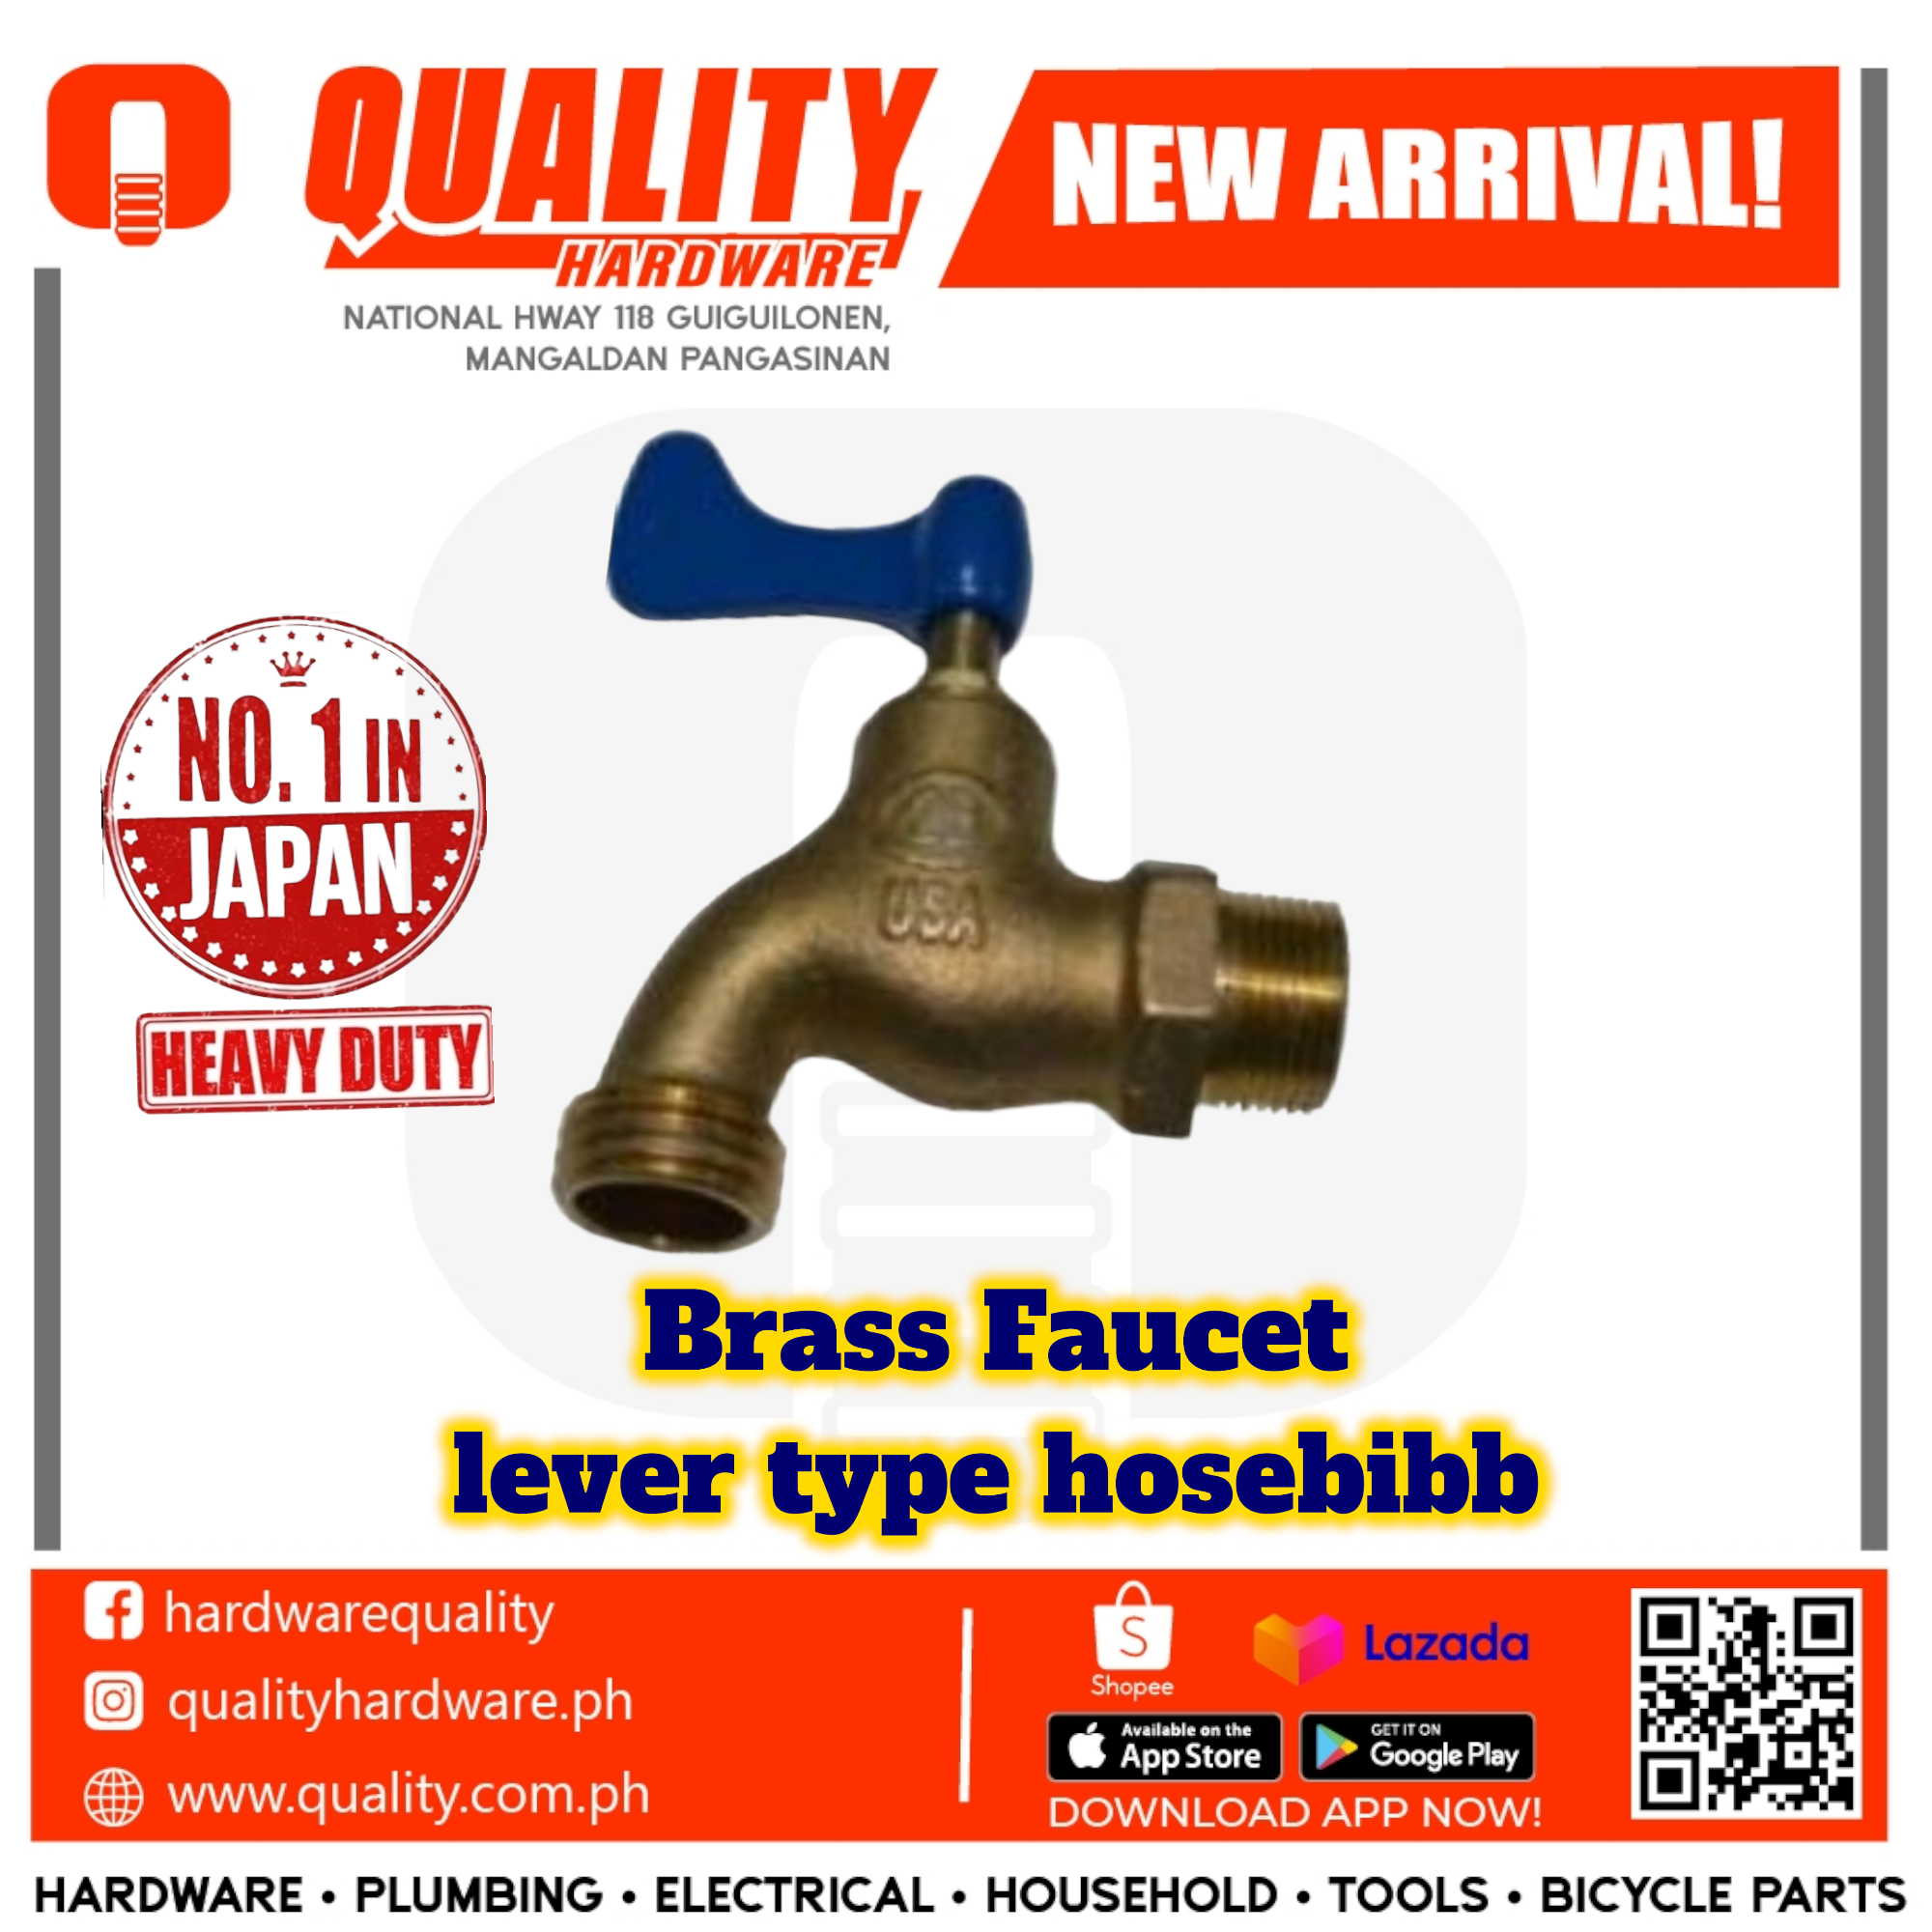 Faucet Hose Bibb Brass Heavyduty Quality Hardware